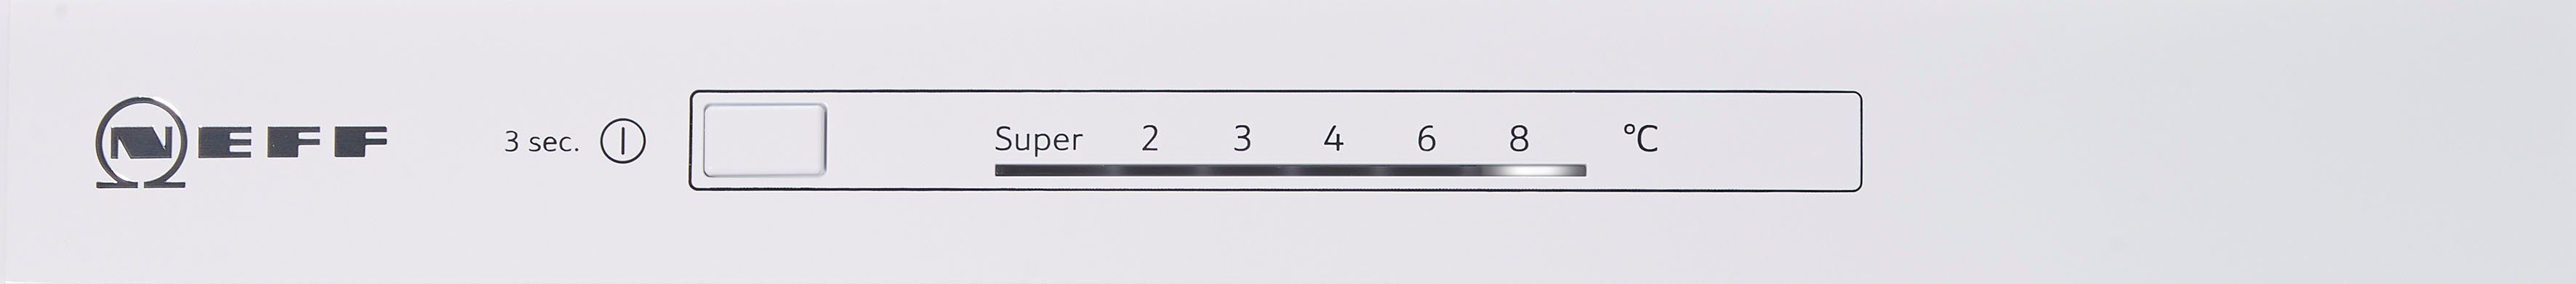 NEFF Einbaukühlgefrierkombination KI5862FE0, 177,2 cm hoch, cm breit 54,1